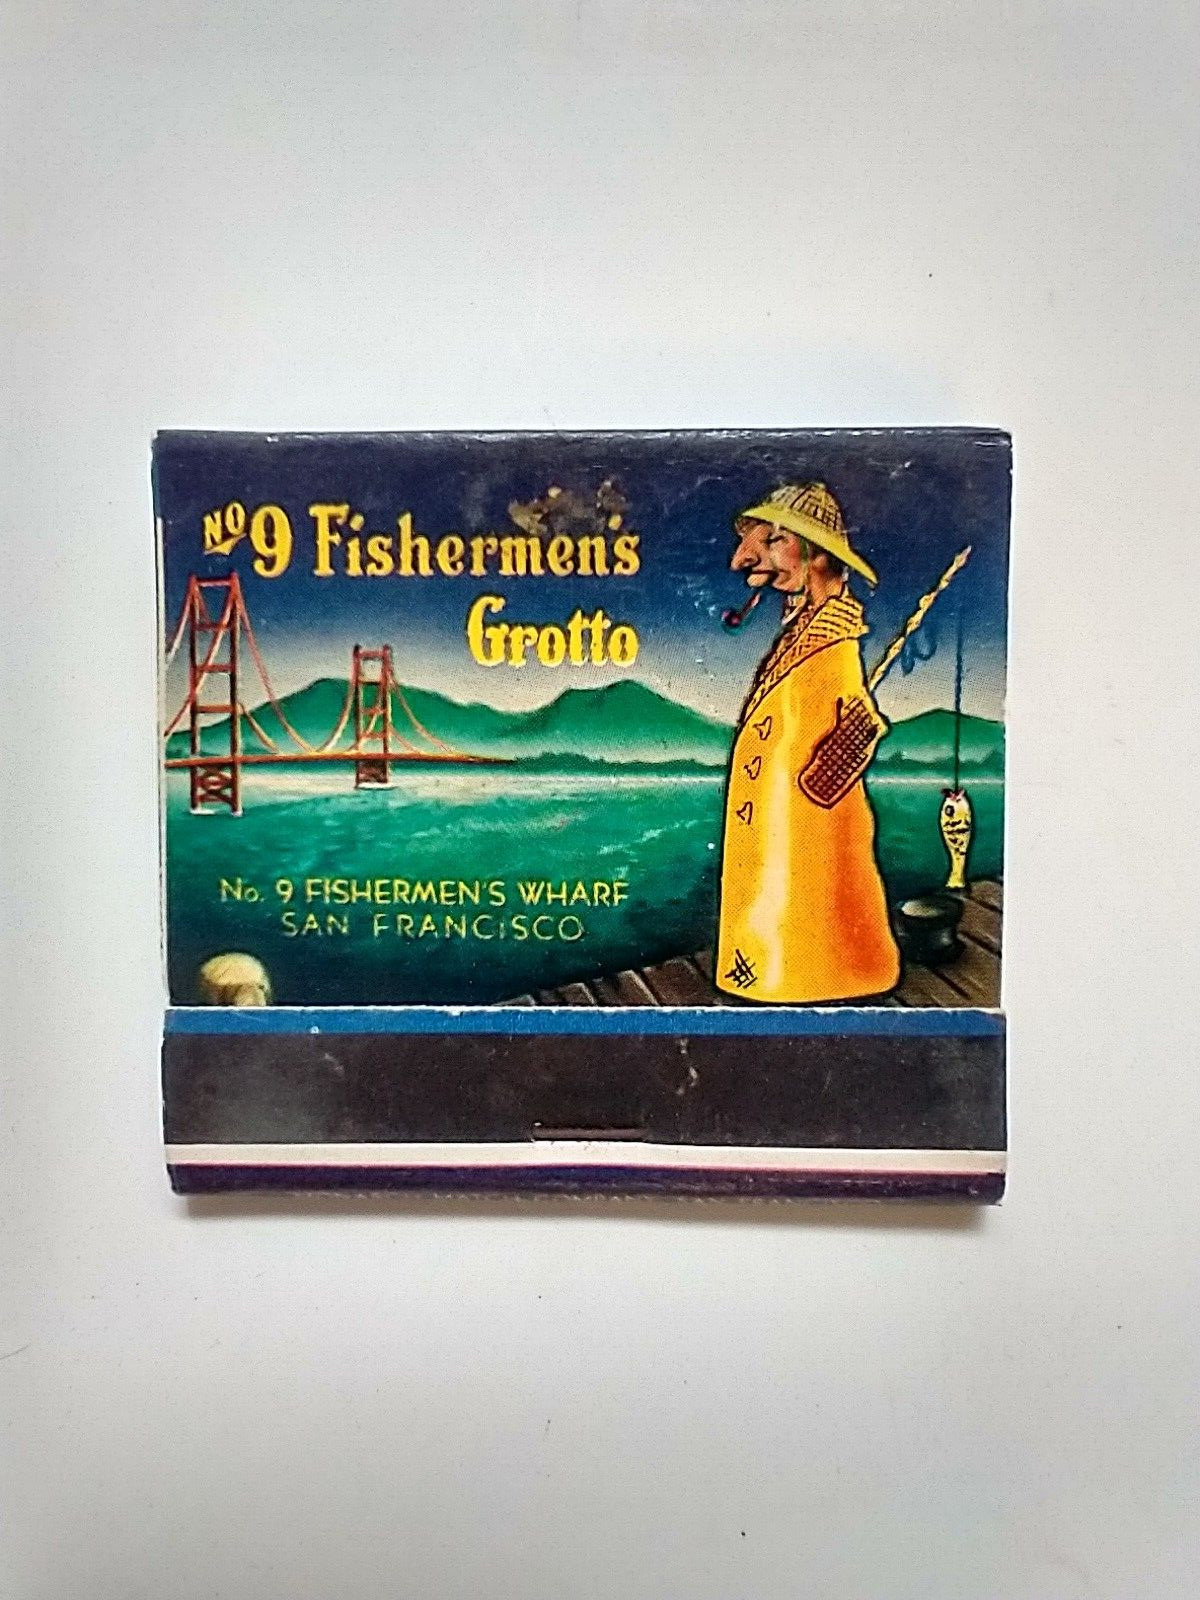 Vintage Unused Matchbook No. 9 Fisherman's Grotto San Francisco